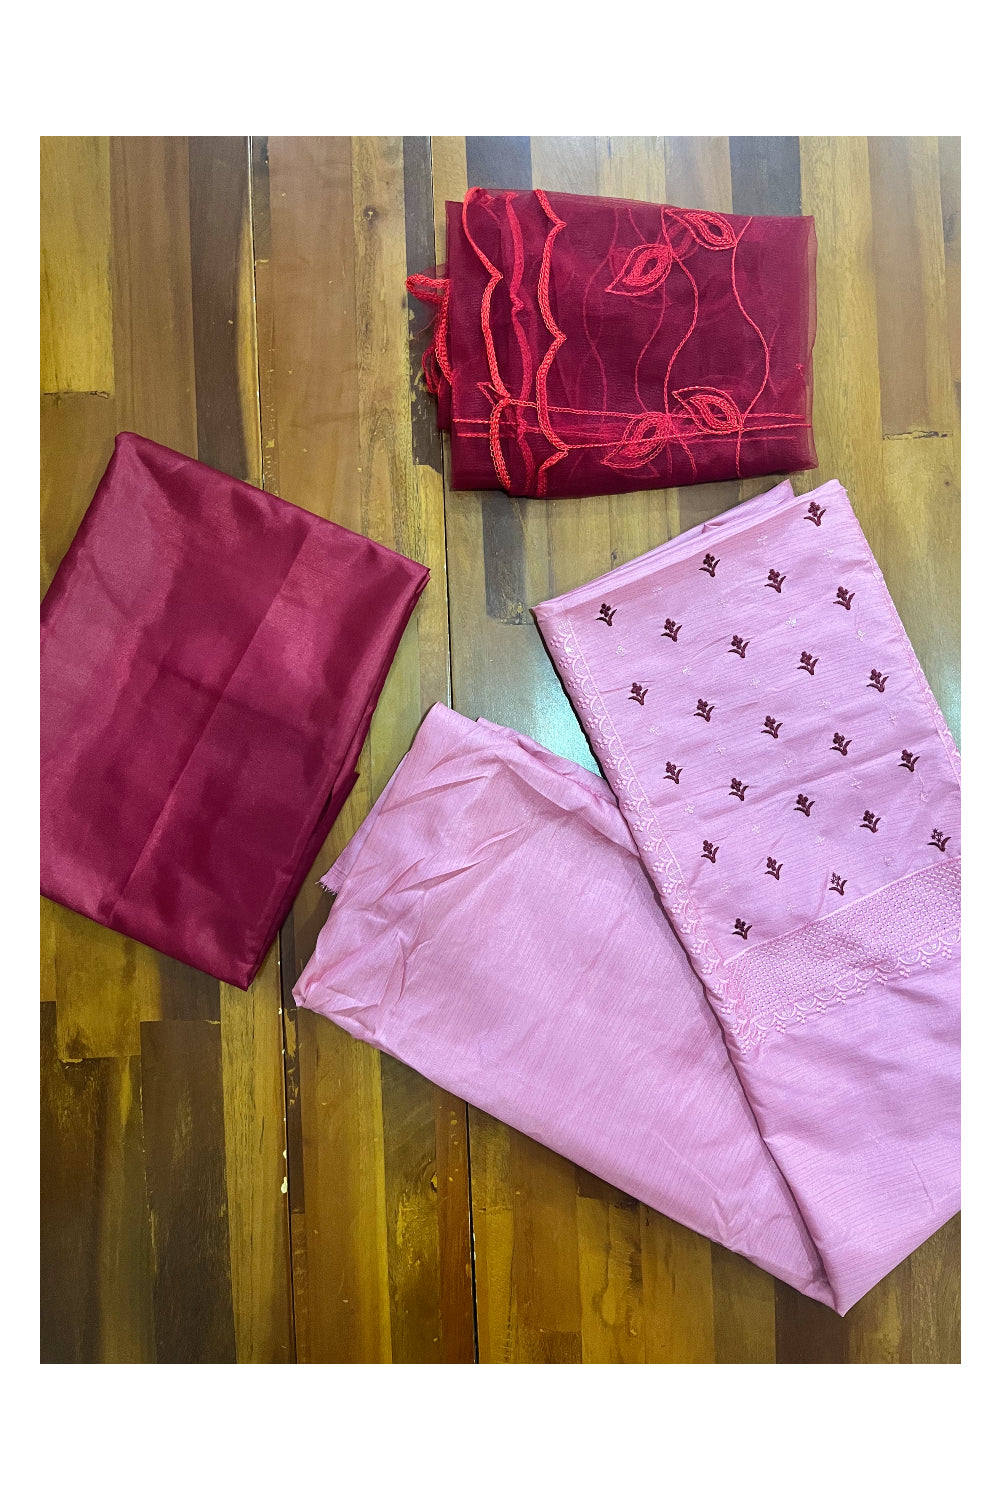 Southloom™ Semi Tussar Churidar Salwar Suit Material in Redish Pink with Thread Works on Yoke